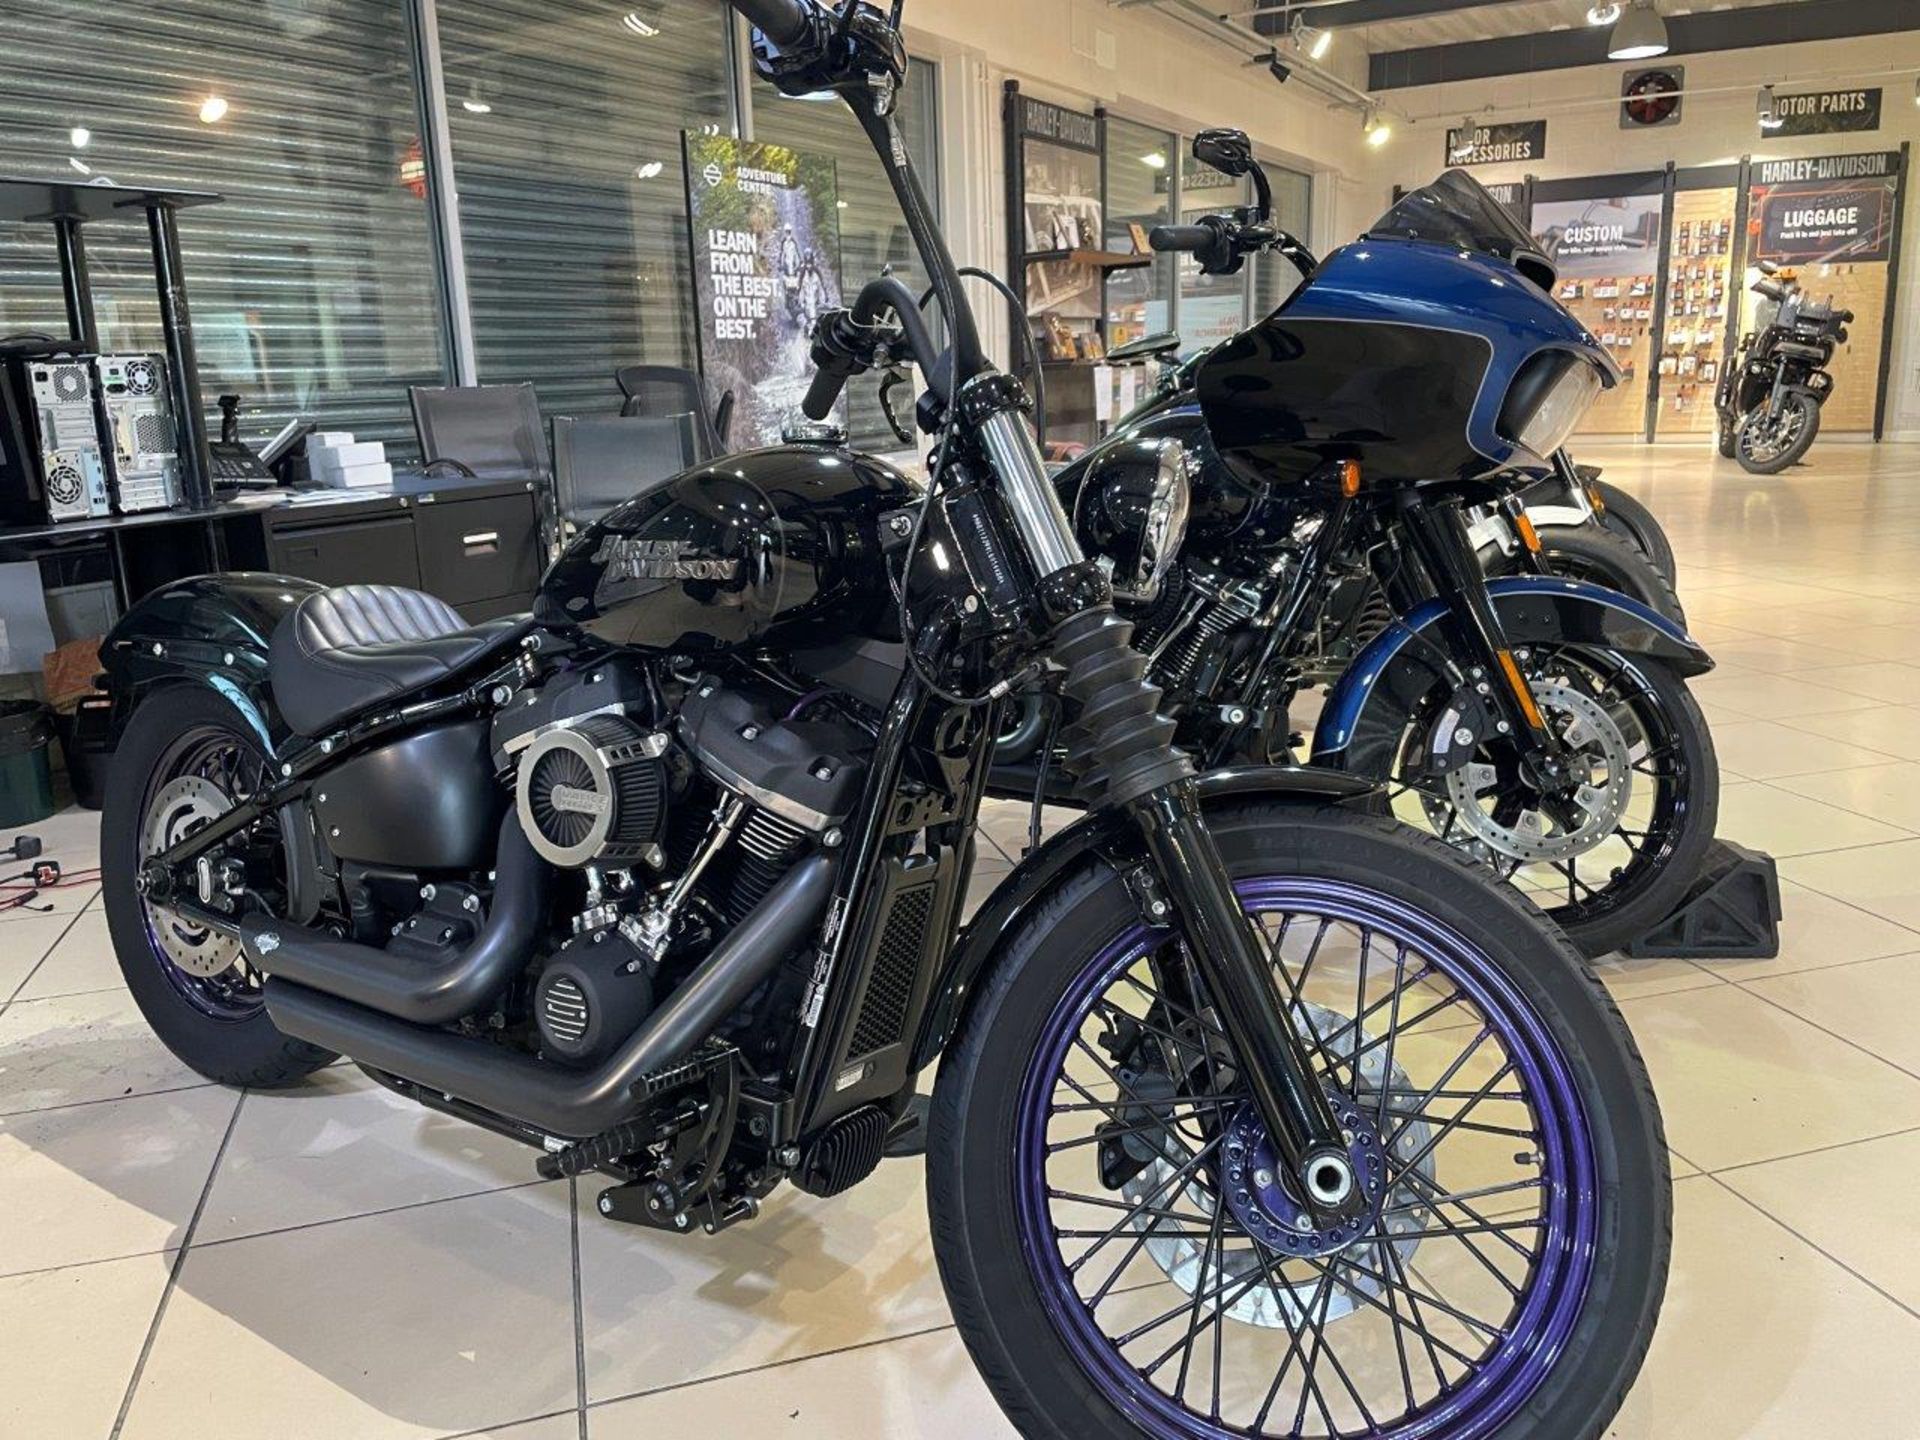 Harley Davidson FXBB Street Bob 1745cc Motorbike (June 2020) - Image 7 of 18